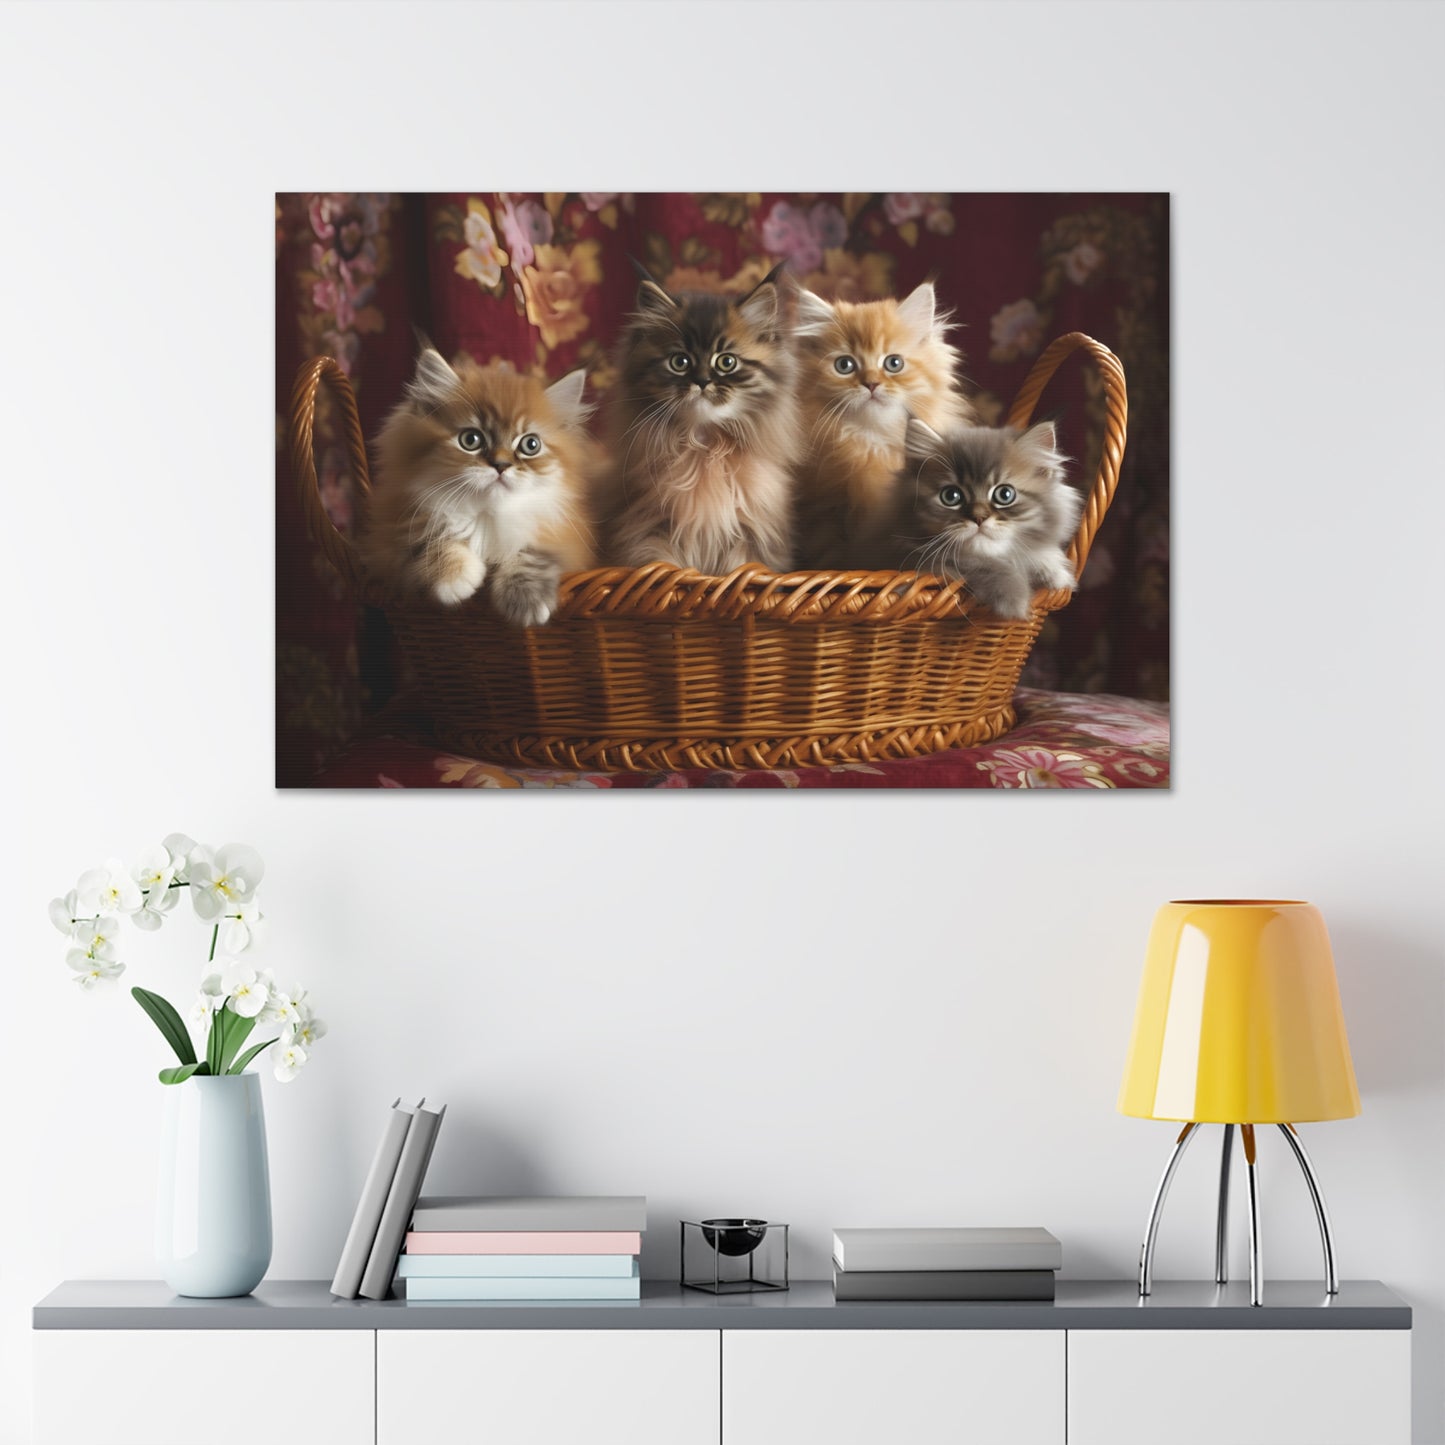 Himalayan Kittens (In a Basket)